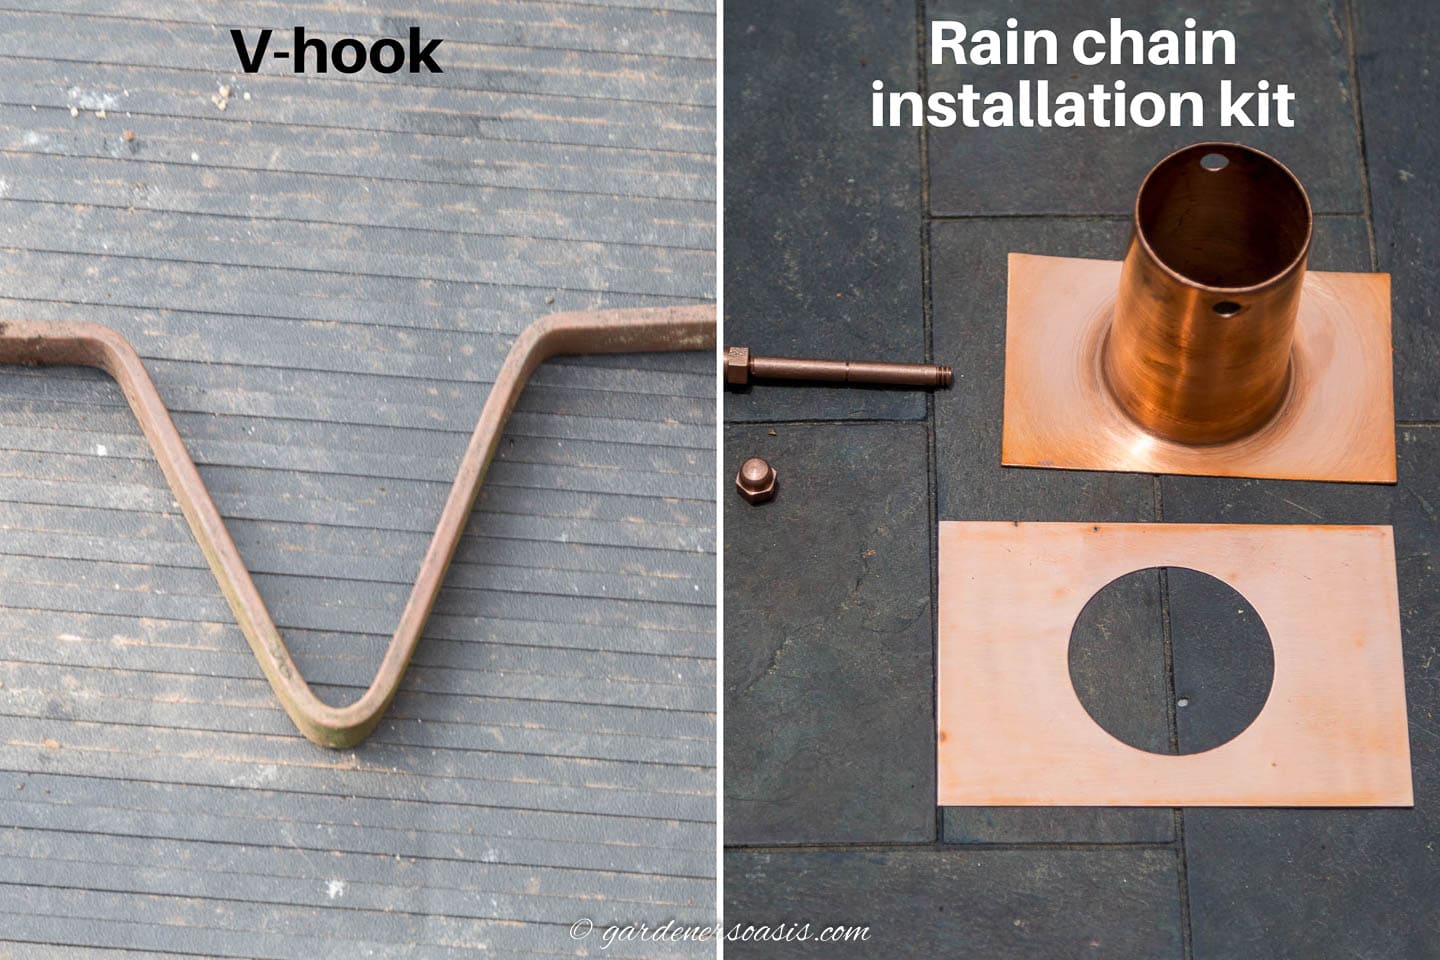 V-hook vs Rain chain installation kit